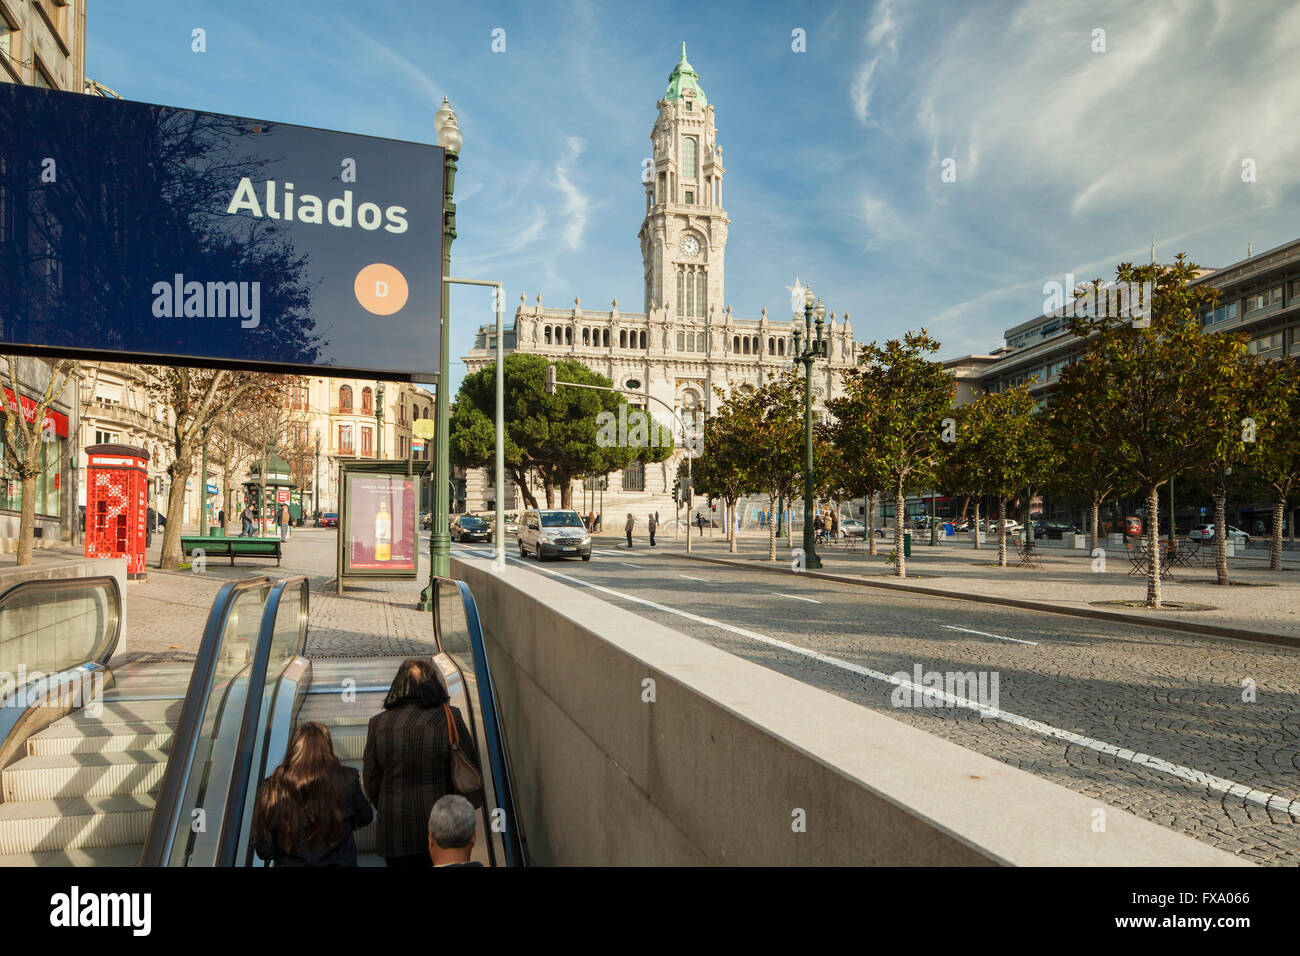 Eingang zum u-Bahnhof Aliados, Rathaus im Hintergrund, Porto, Portugal. Stockfoto